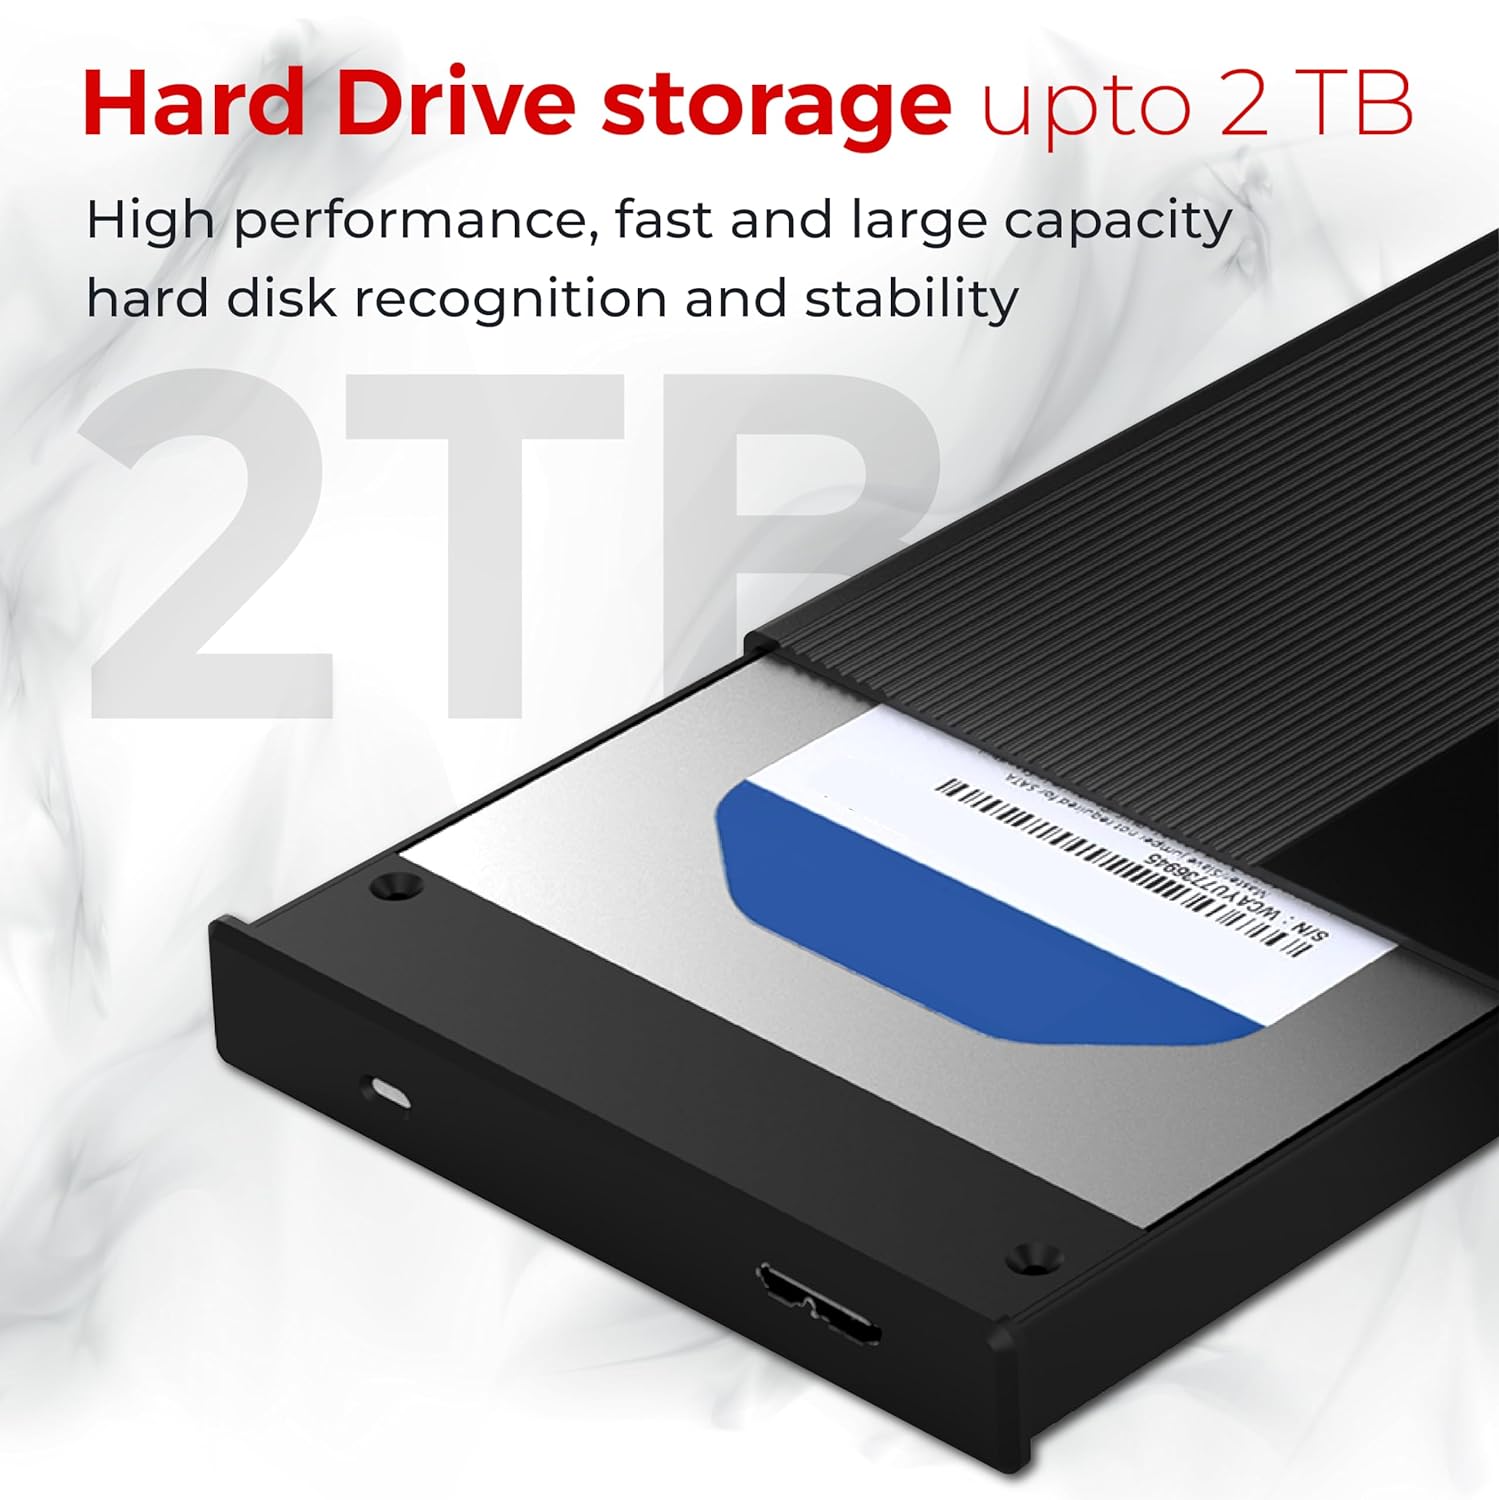 SUHSAI External Hard Drive 500GB USB 3.0 Portable Hard Disk Storage & Memory Expansion HDD, Backup External Hard Drive for Laptop Computer, MacBook, and Desktop (Silver)